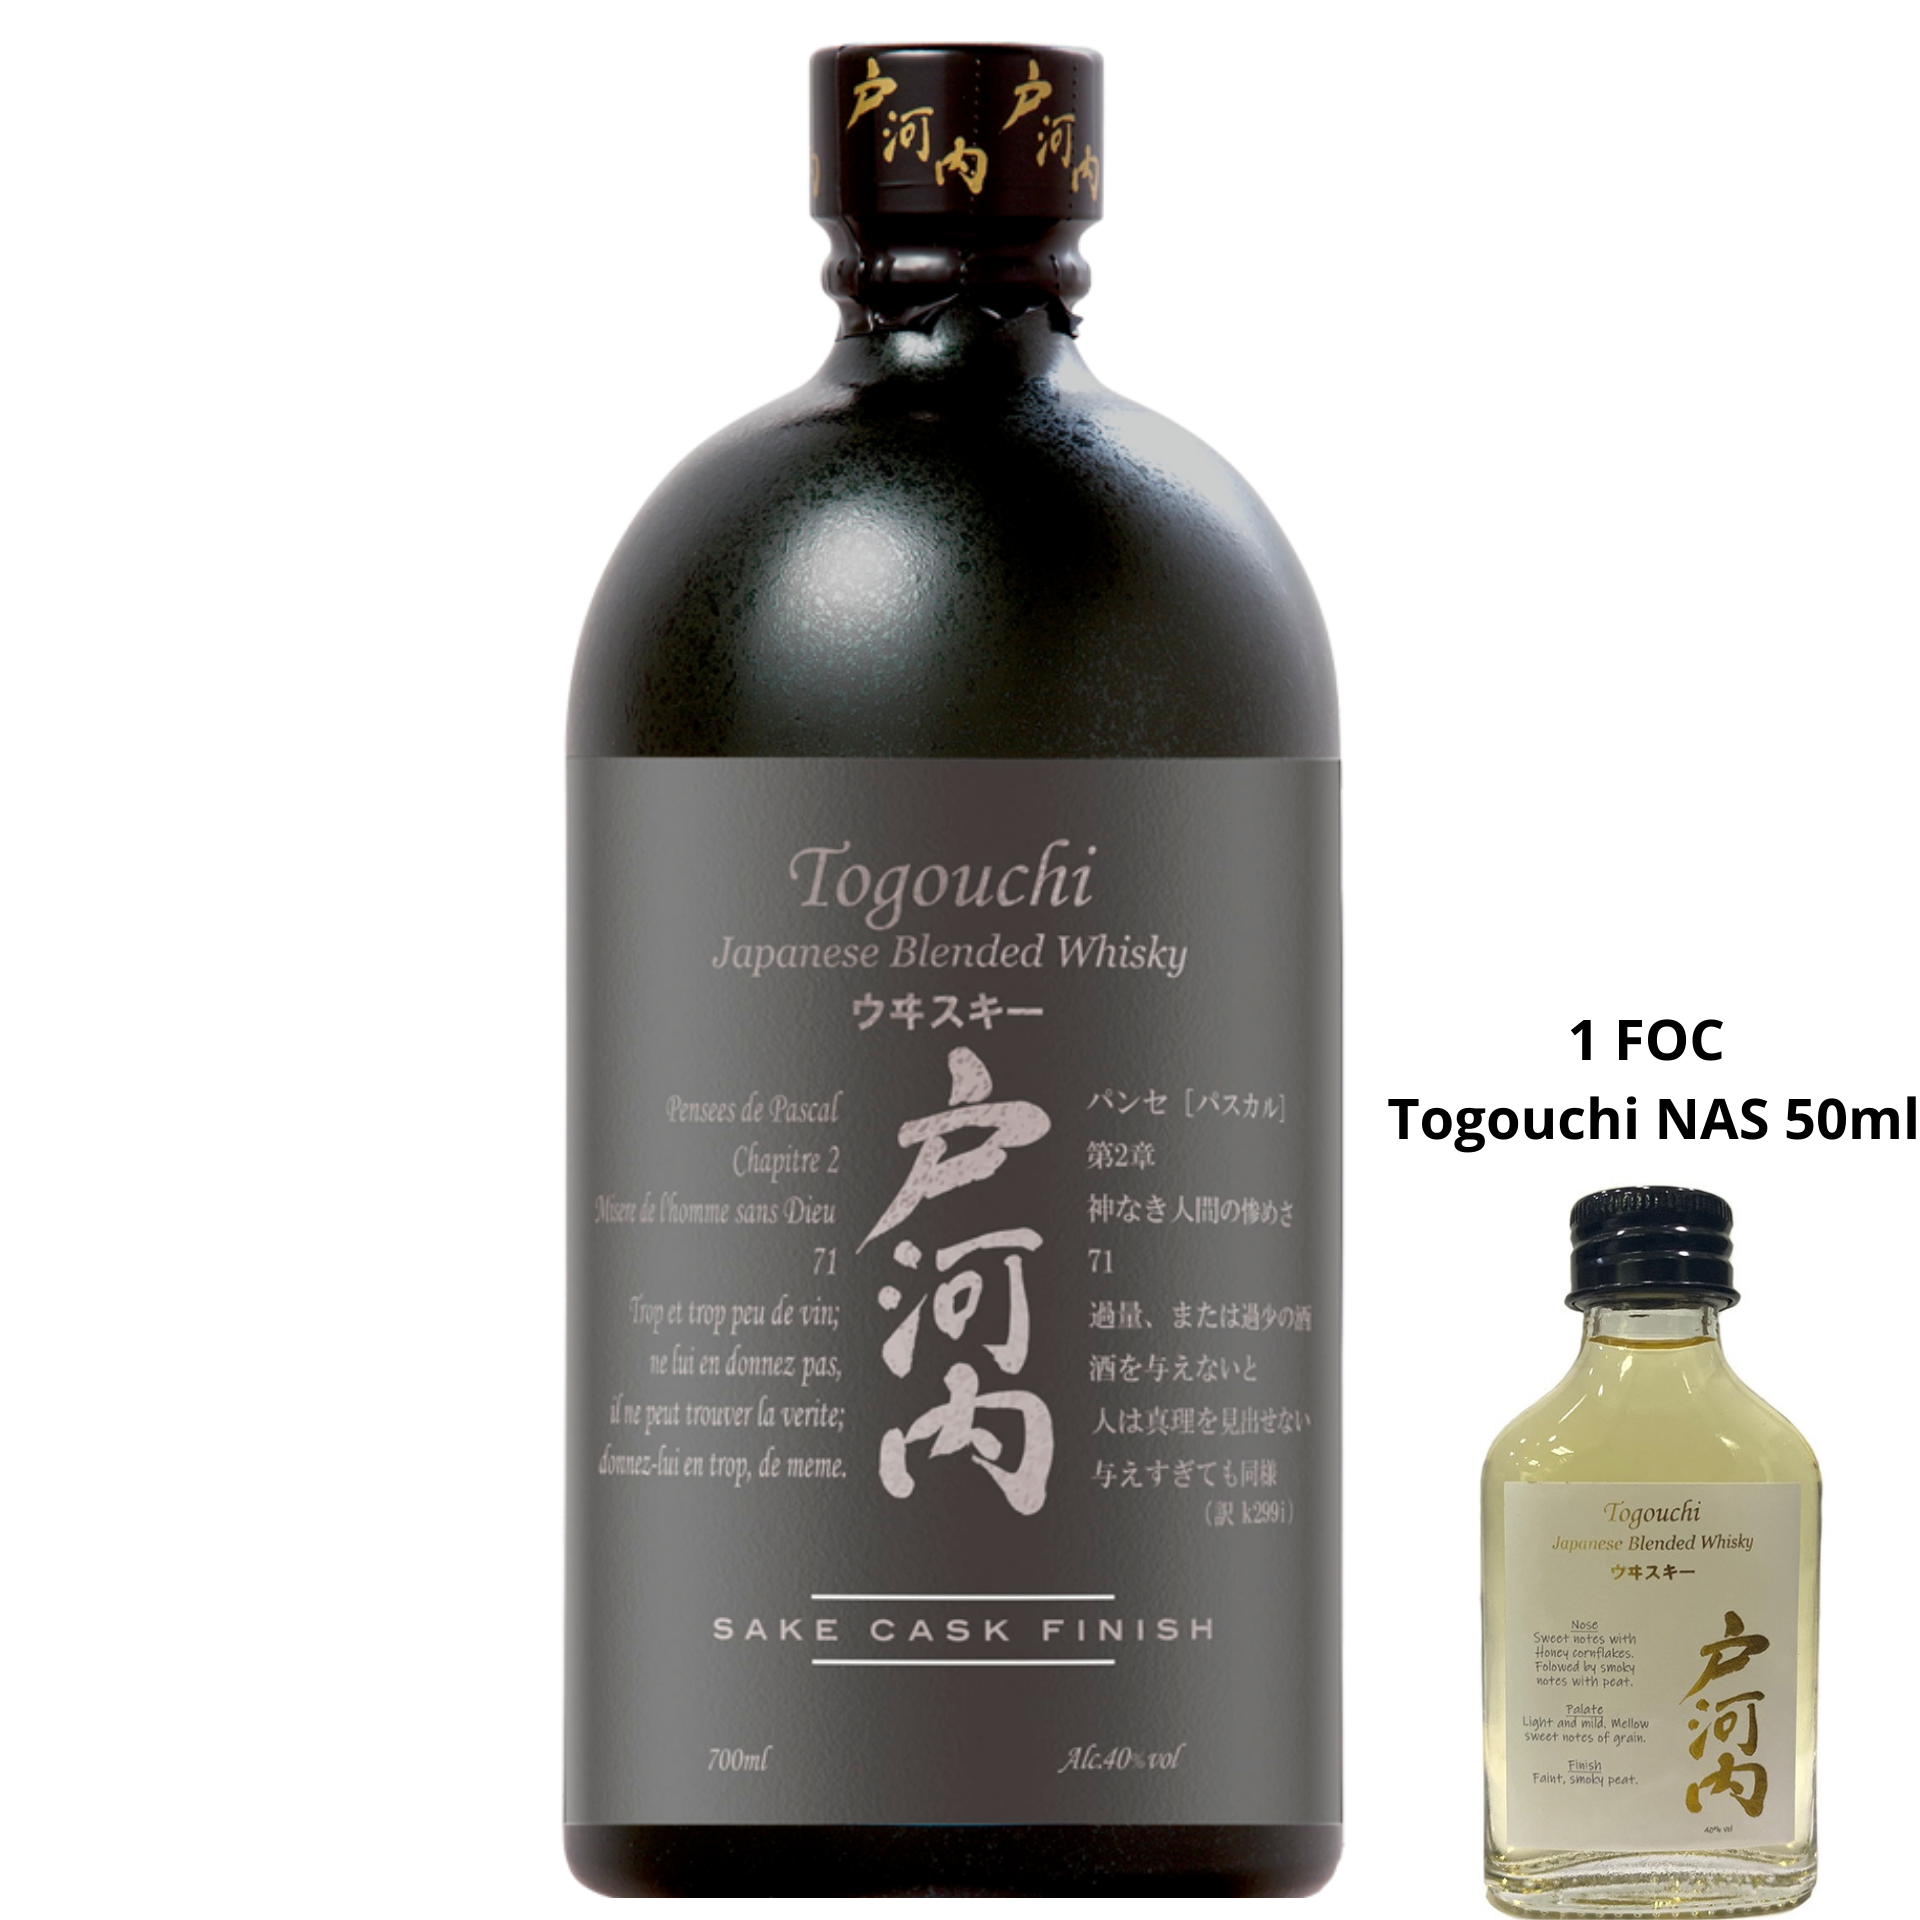 Togouchi Blended Whisky Sake Cask Finish 700ml + FOC Togouchi NAS 50ml